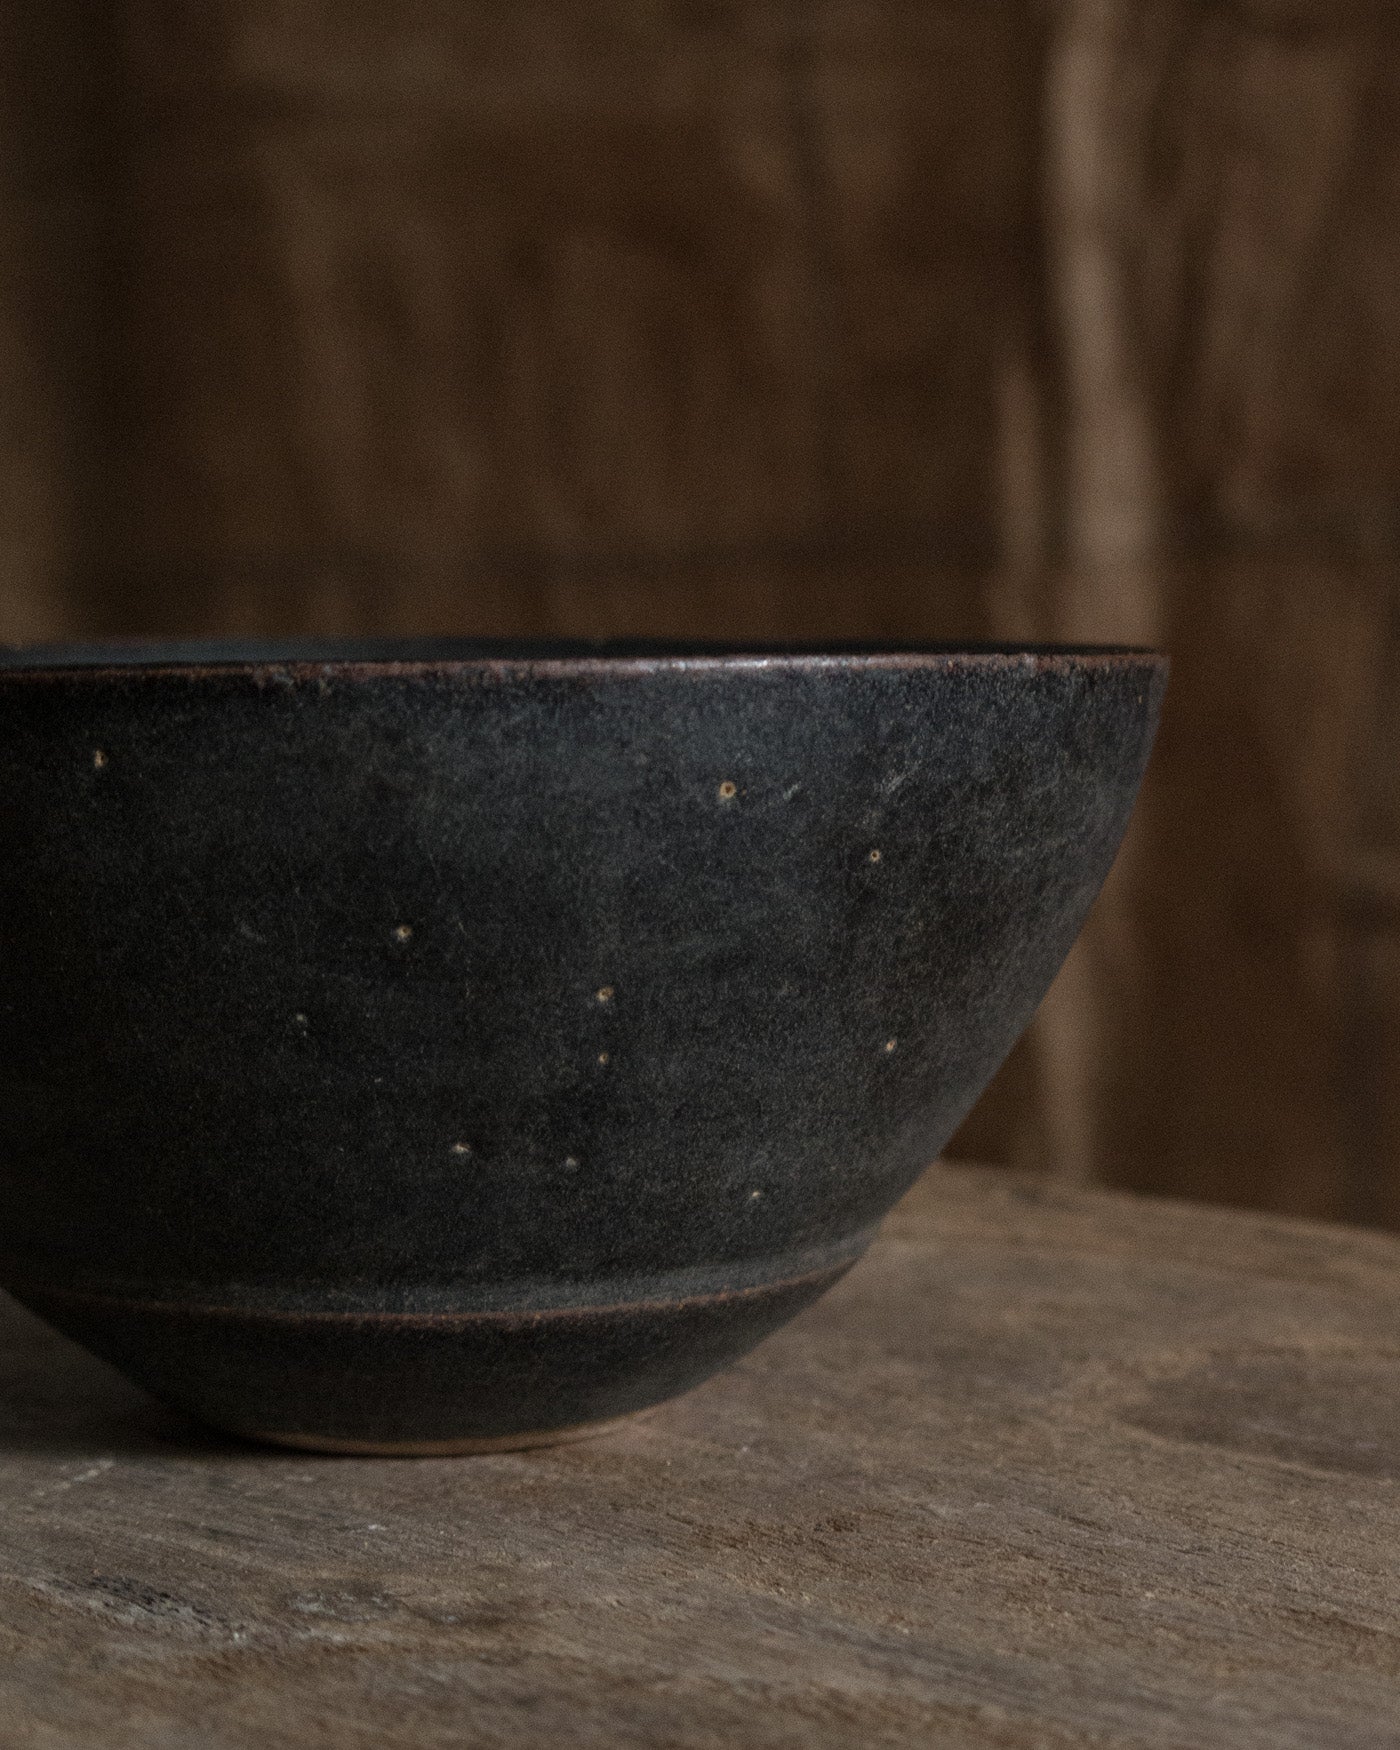 高棉黒褐鉄釉茶碗 Khmer Dark-Brown Glazed Tea Bowl 